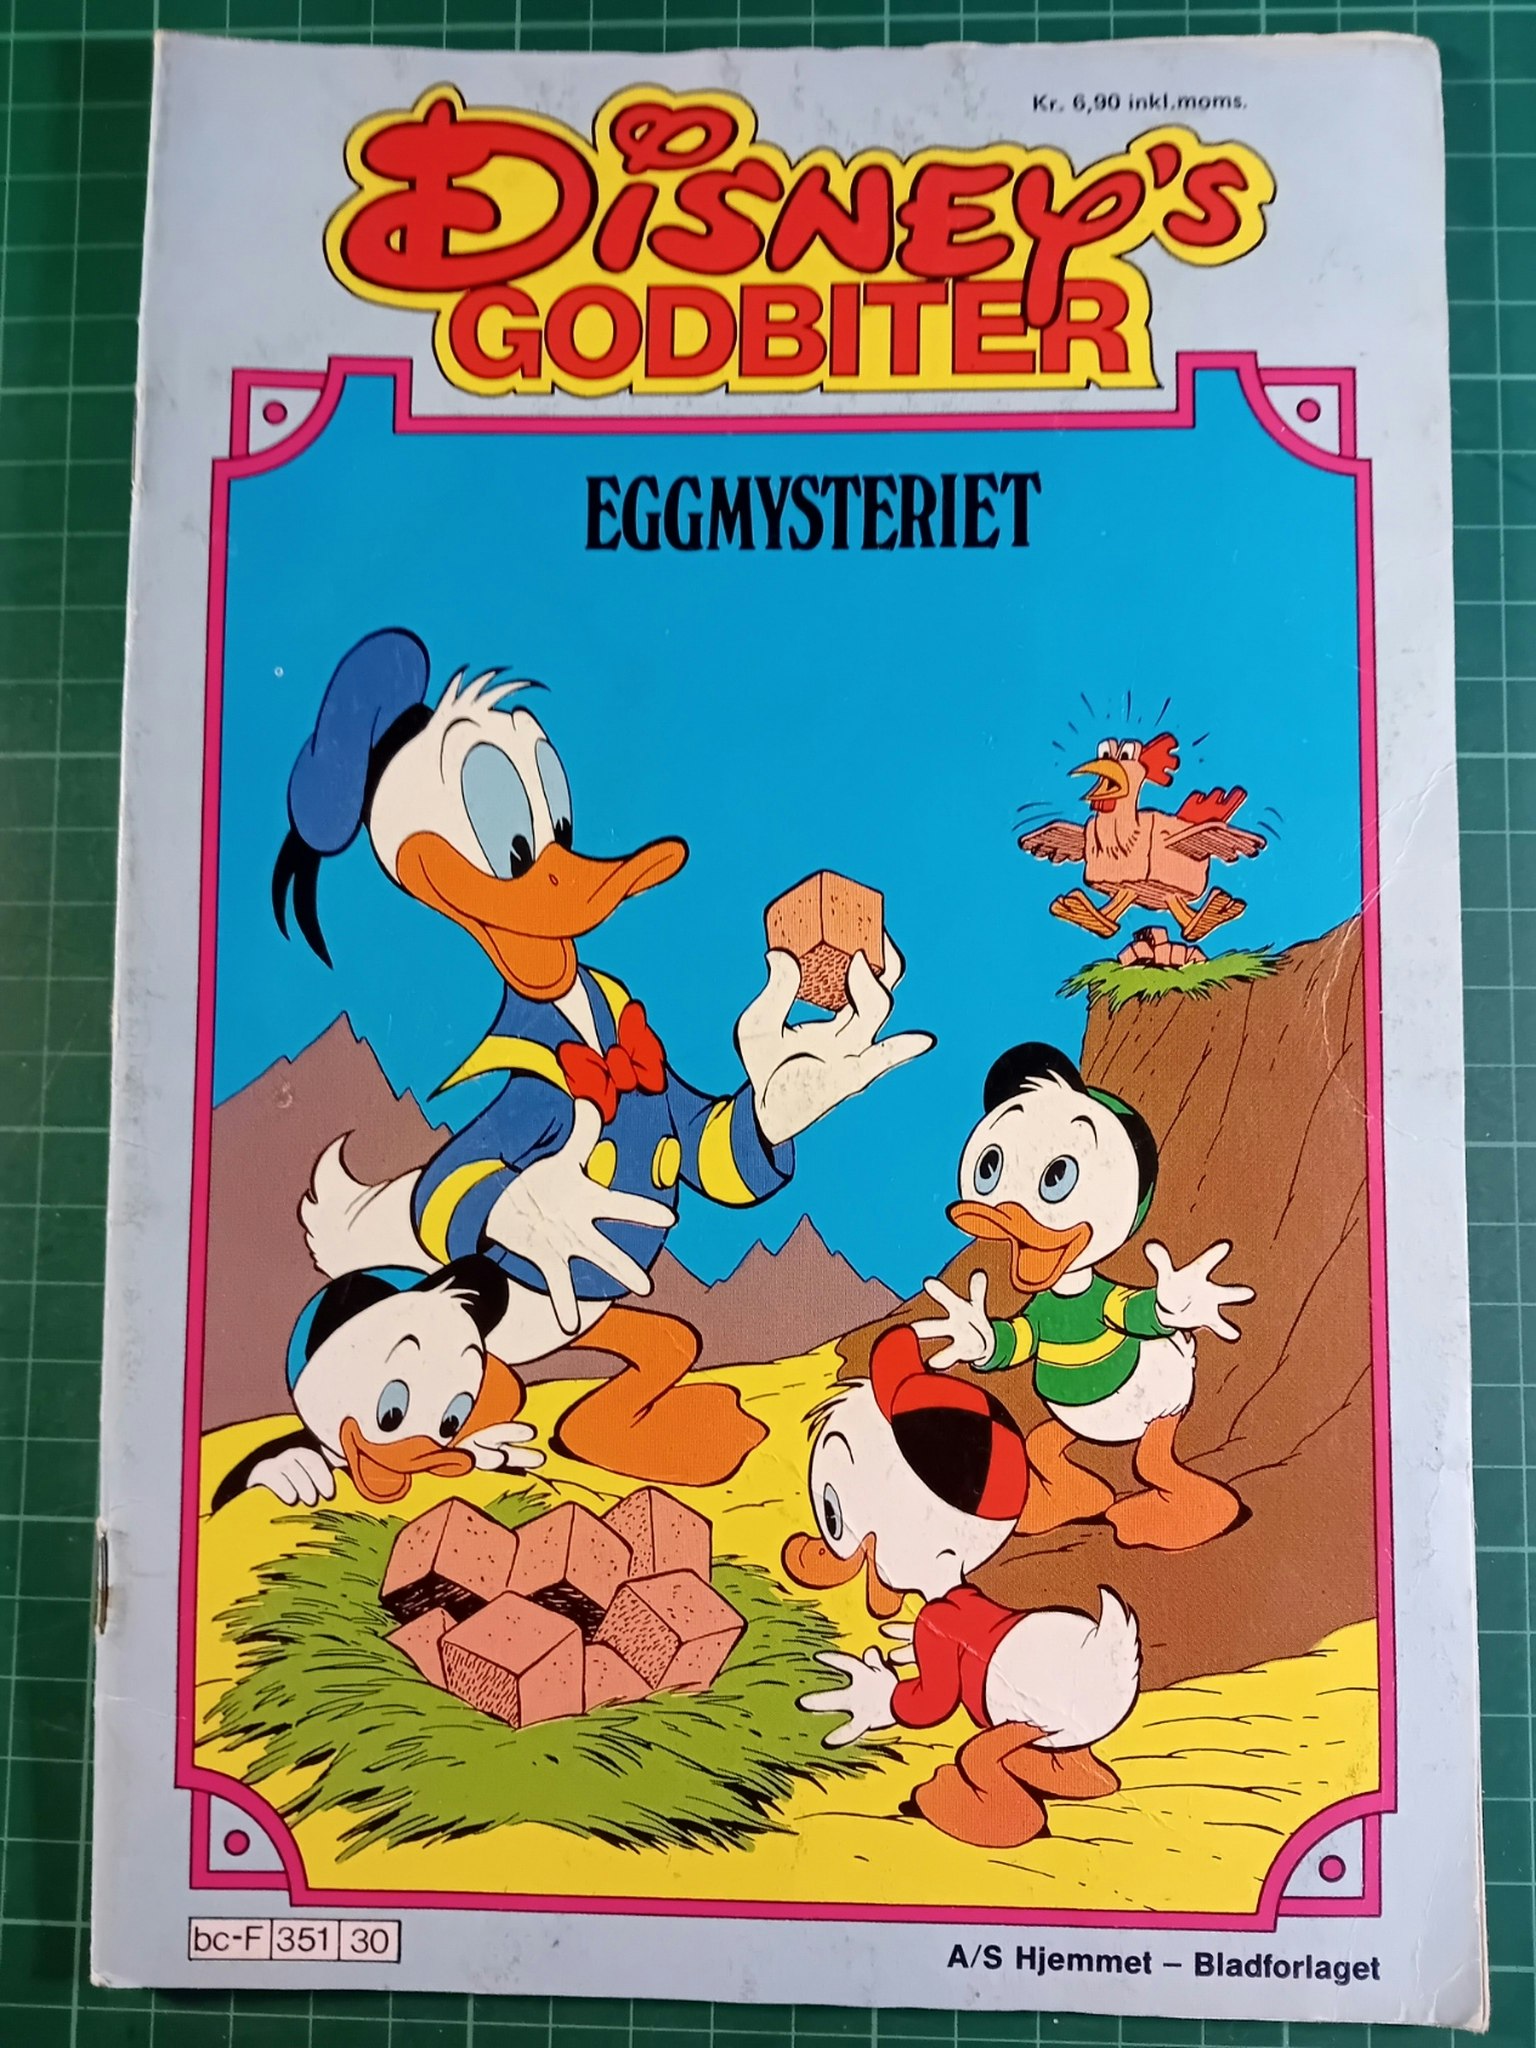 Walt Disney's godbiter : Eggmysteriet